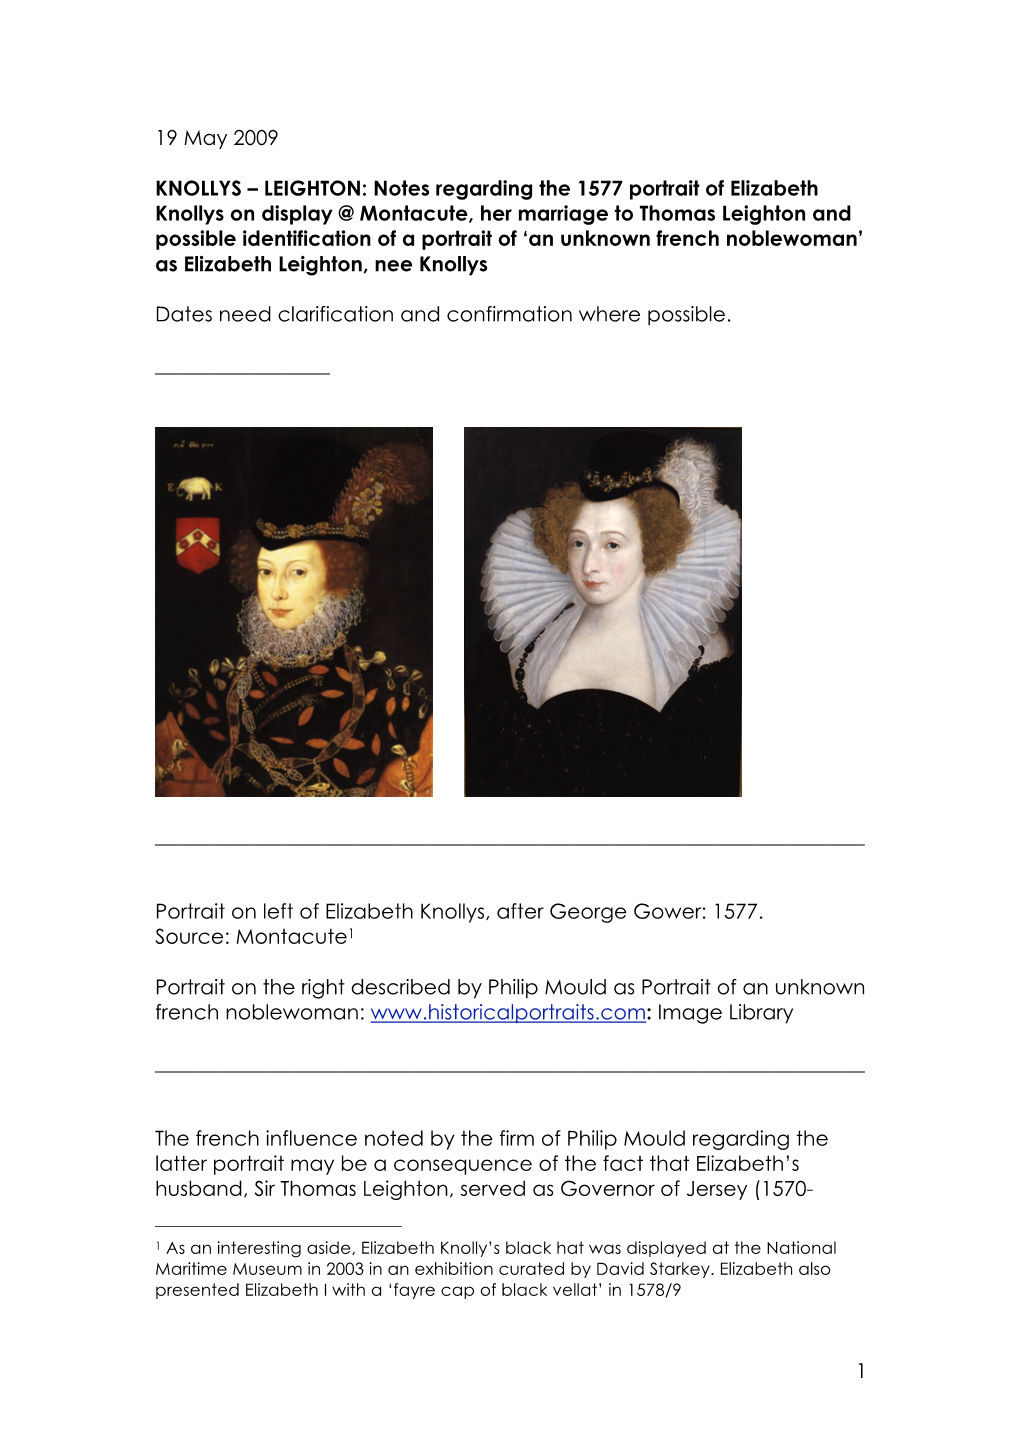 LEIGHTON: Notes Regarding the 1577 Portrait of Elizabeth Knollys On